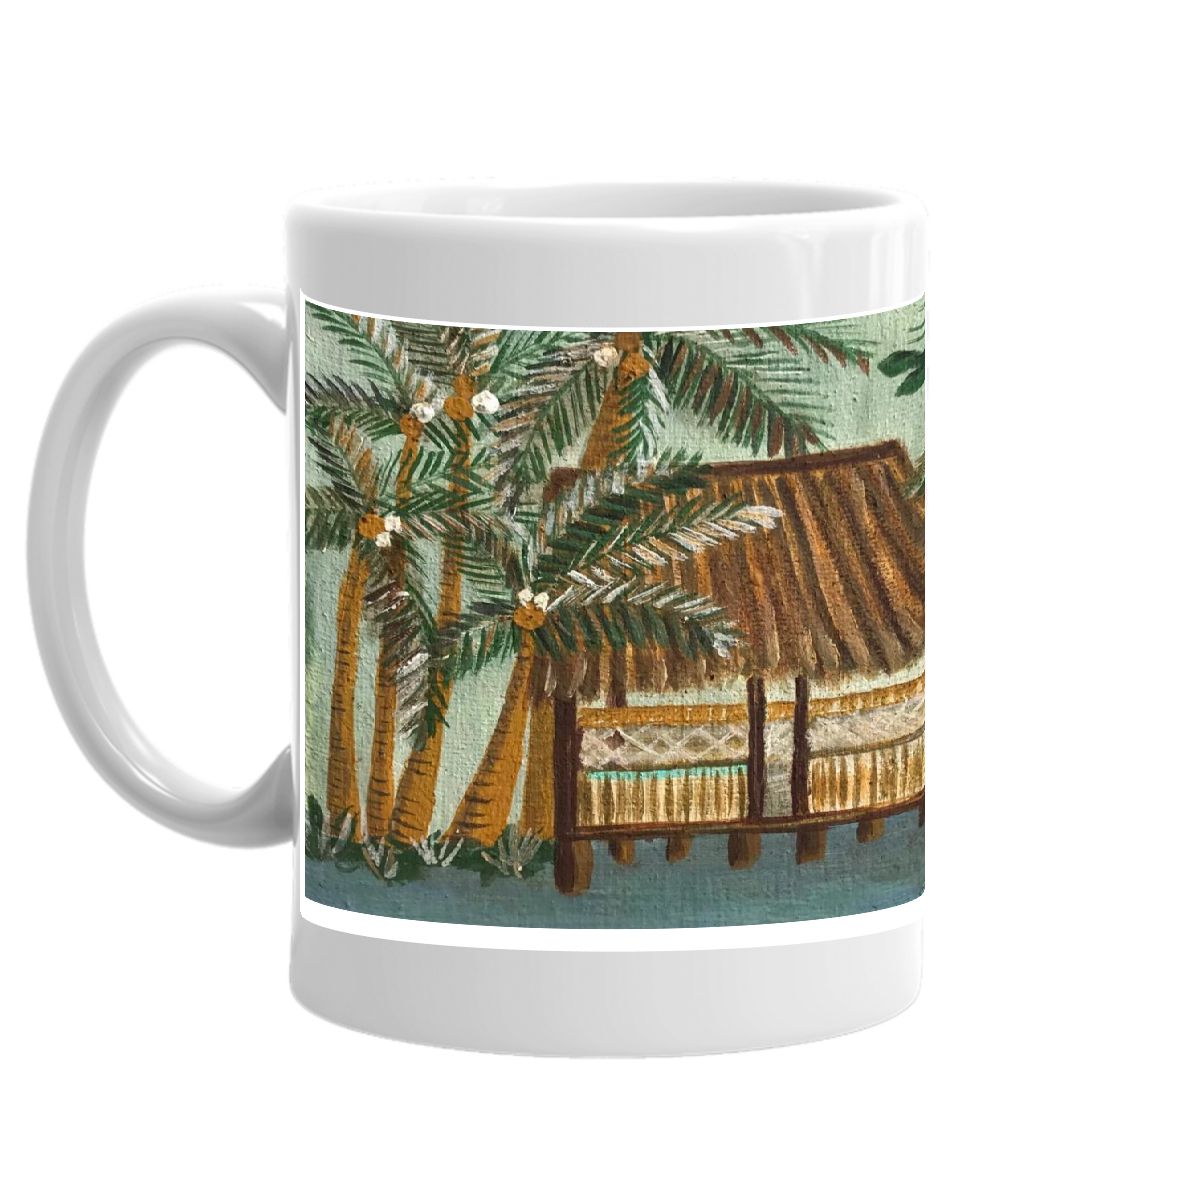 The Amazon Rainforest Coffee Mug